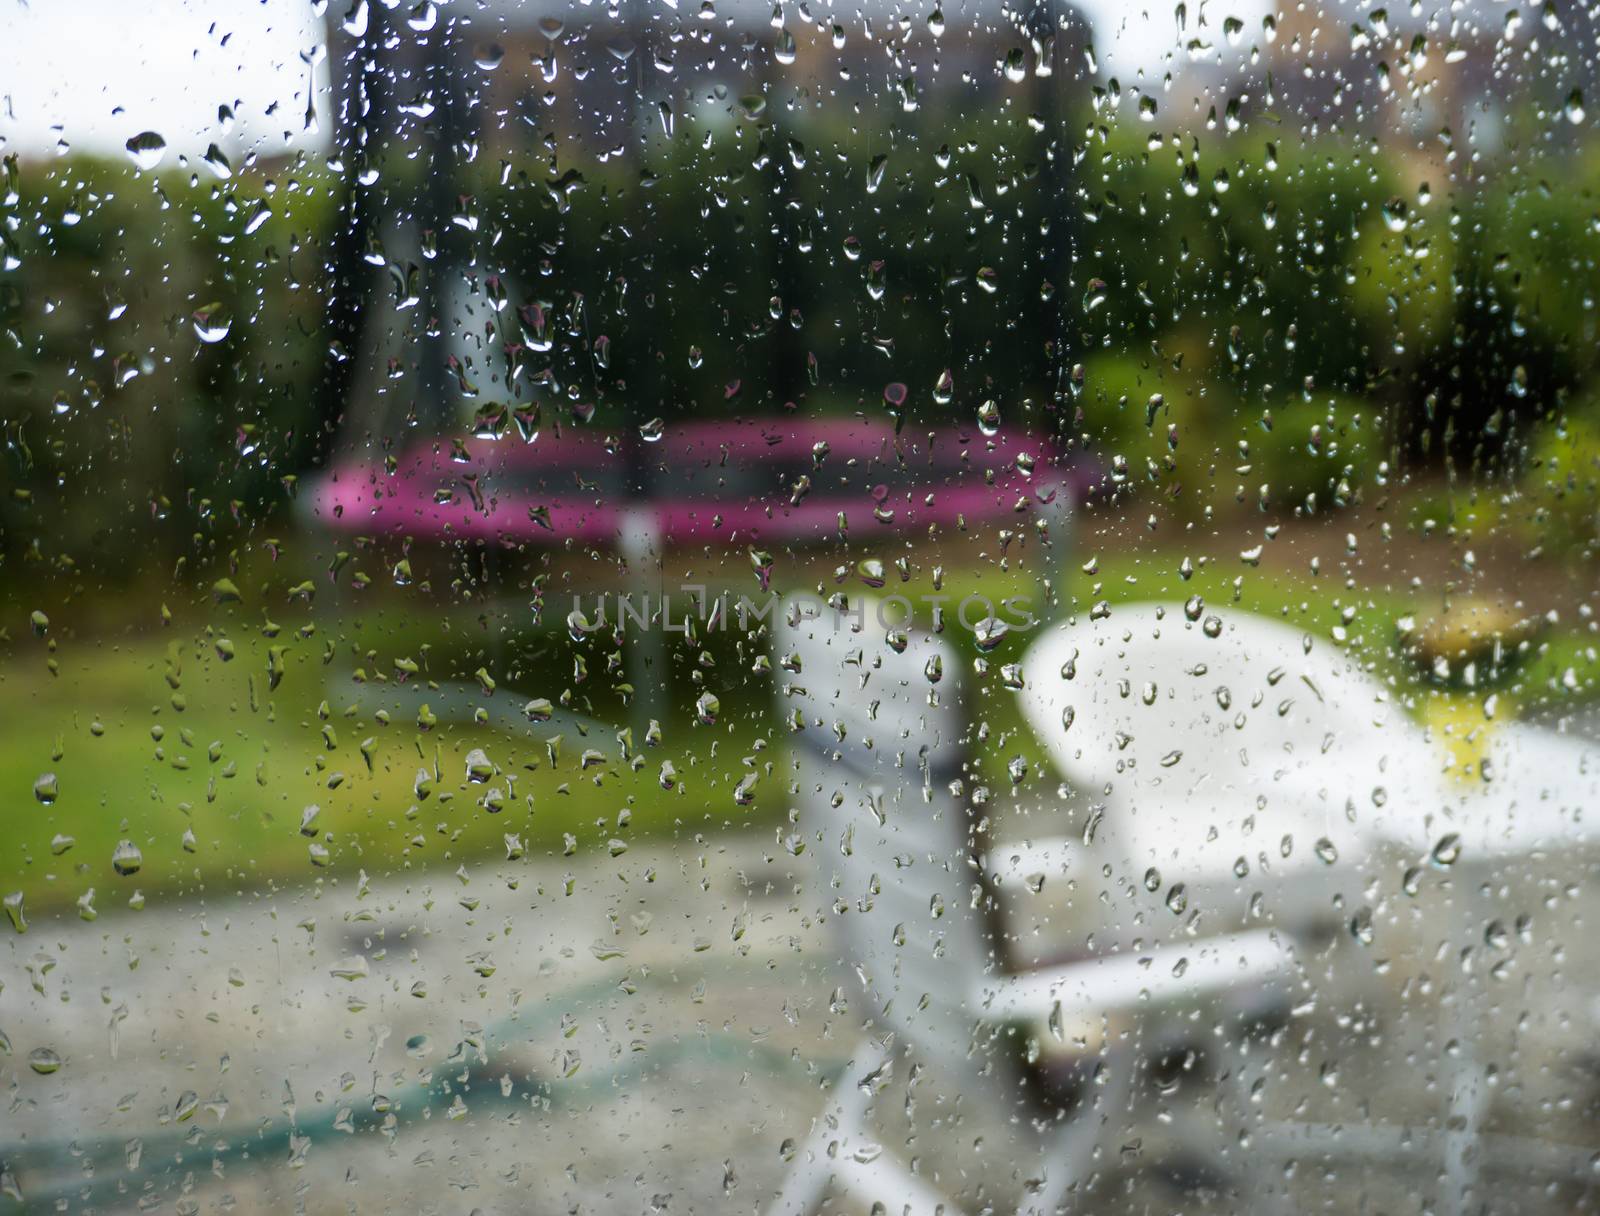 autumn season looking through the window on a rainy day blurry garden background and rain drops on the glass window by charlottebleijenberg